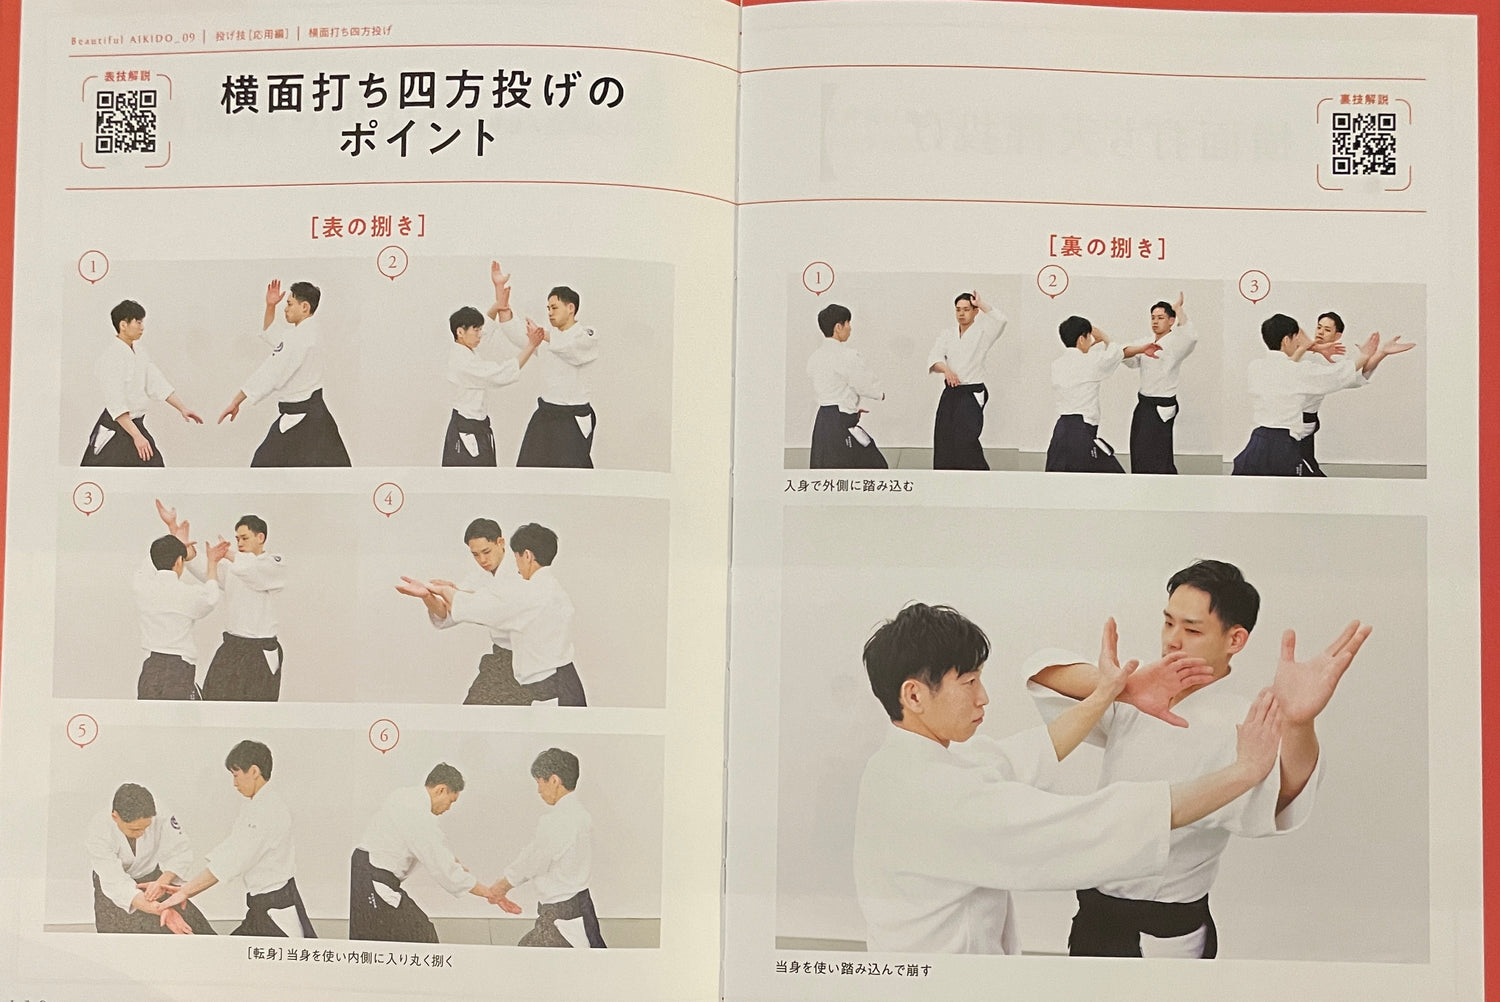 Beautiful Aikido Book w QR Codes by Ryuji Shirakawa